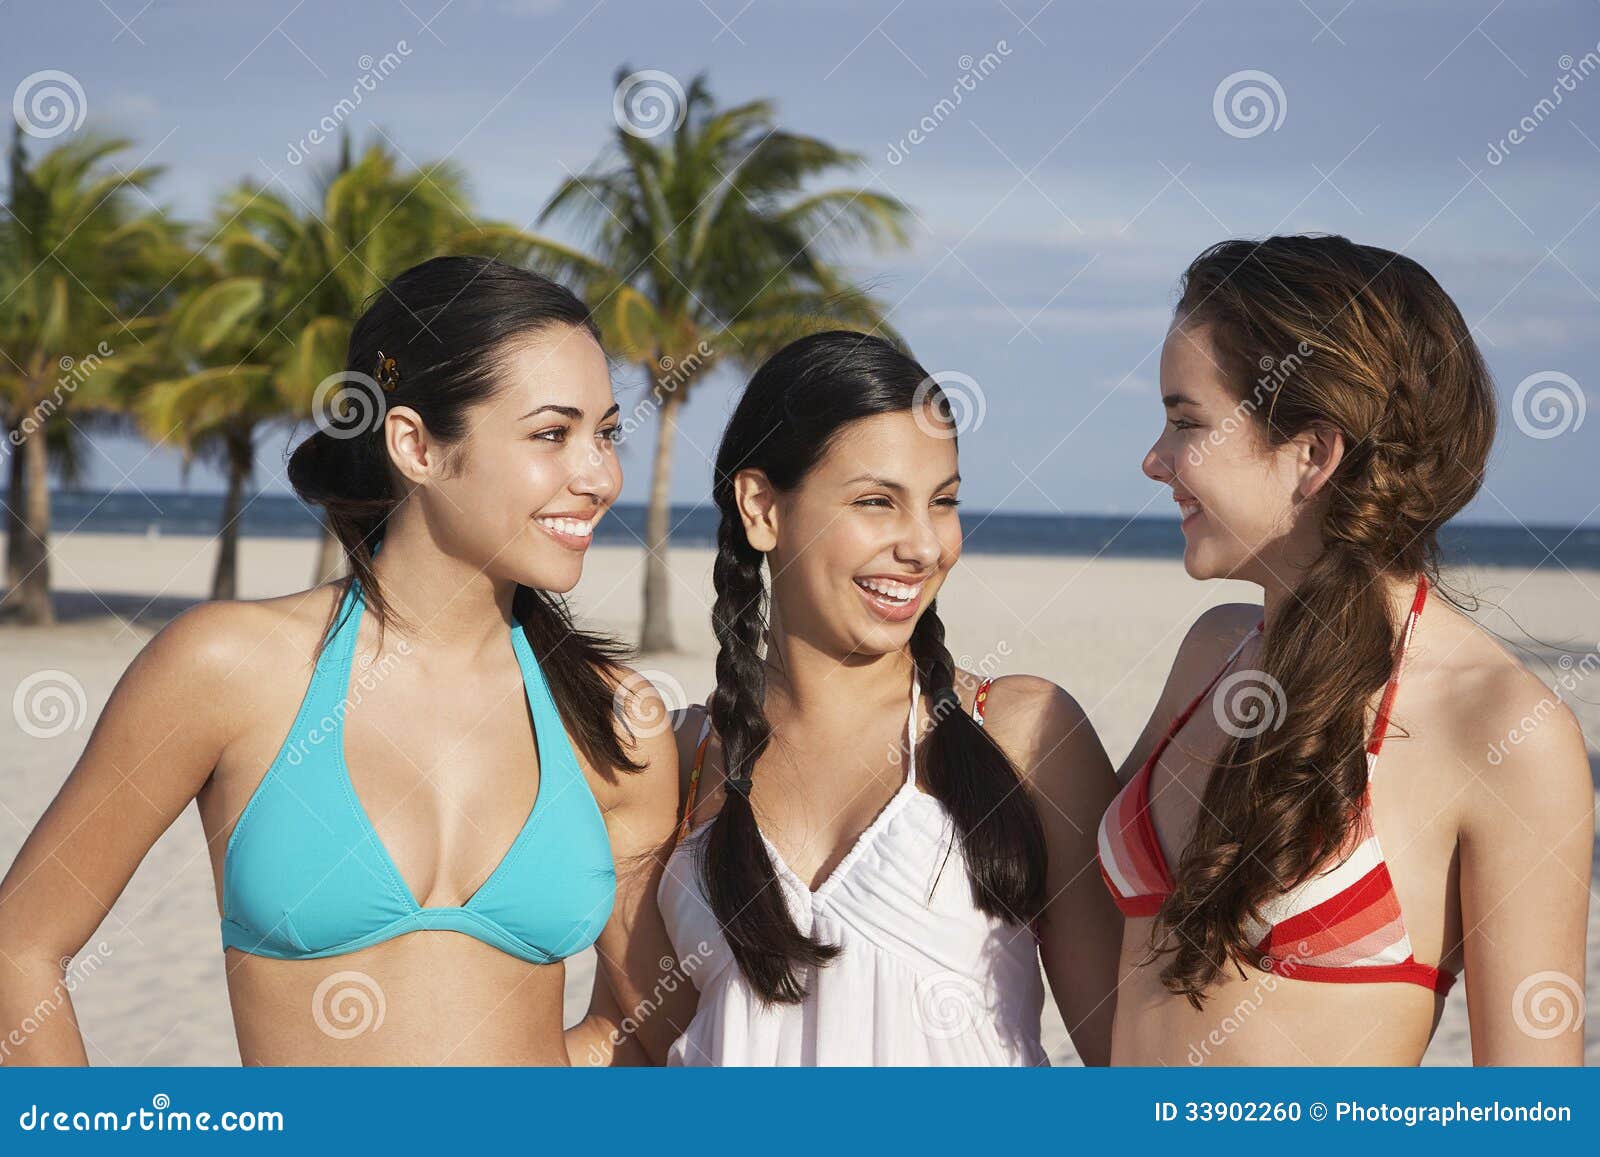 south beach miami girls topless